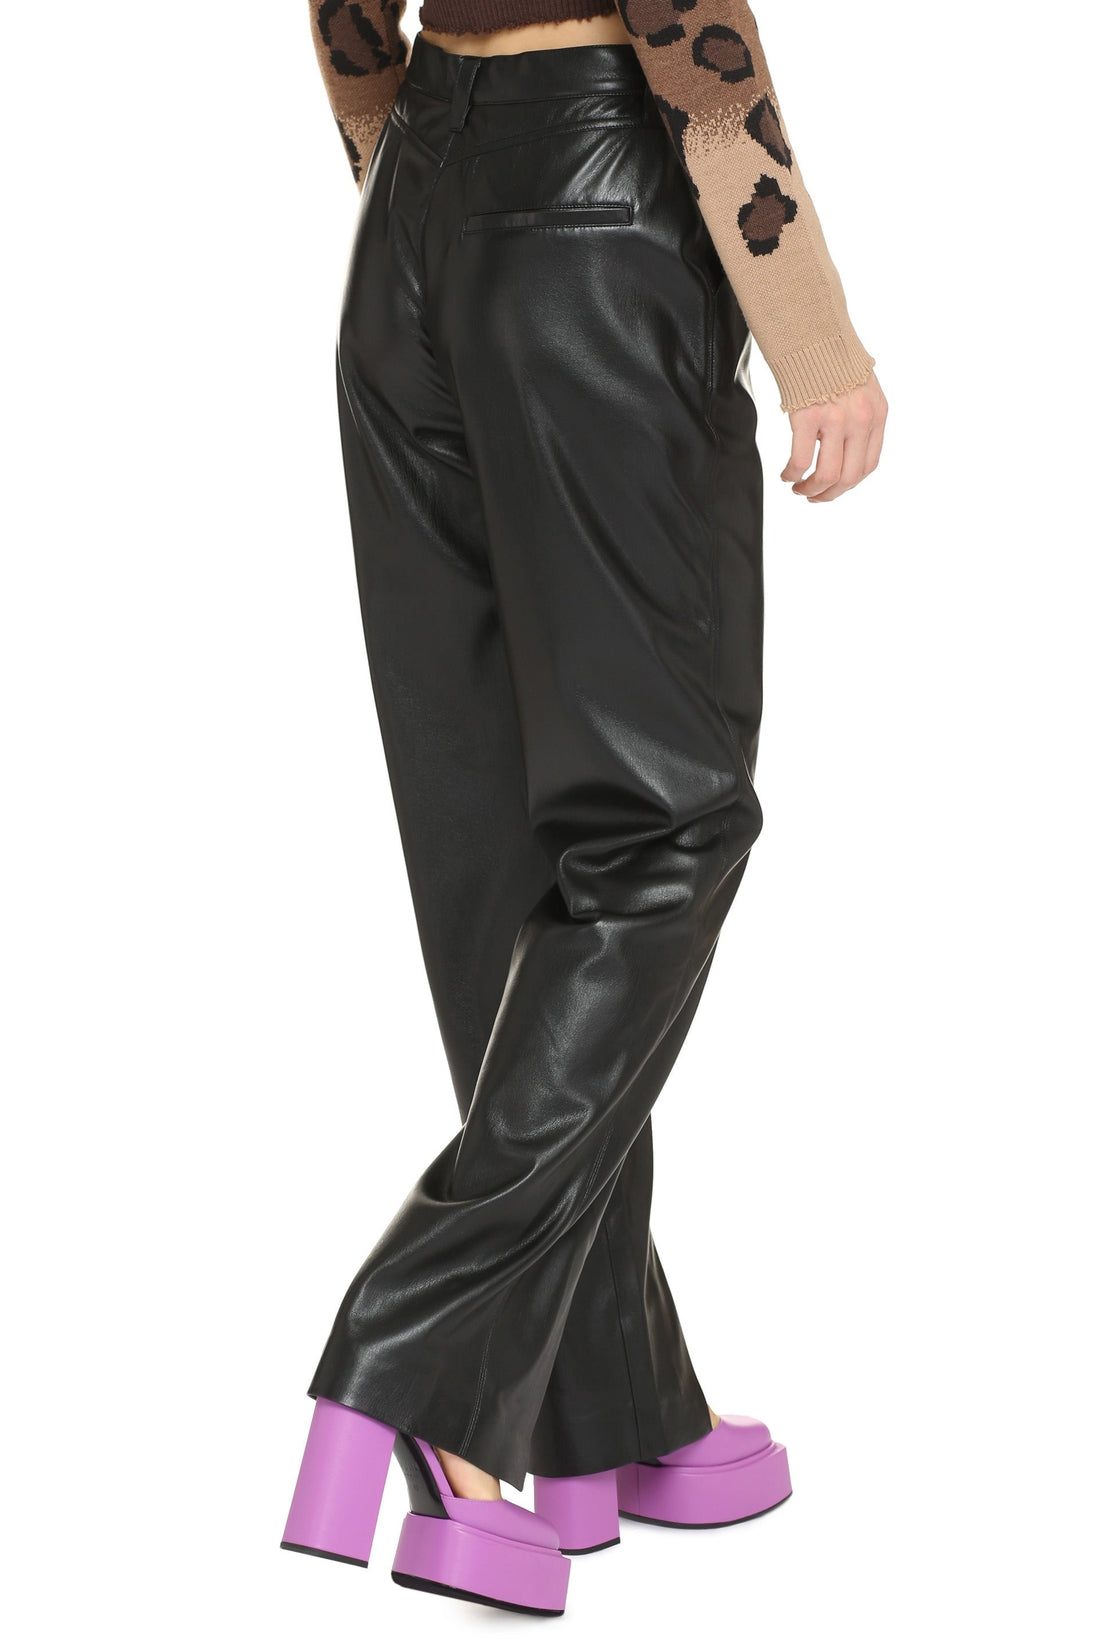 Nanushka-OUTLET-SALE-Masa alter-nappa trousers-ARCHIVIST